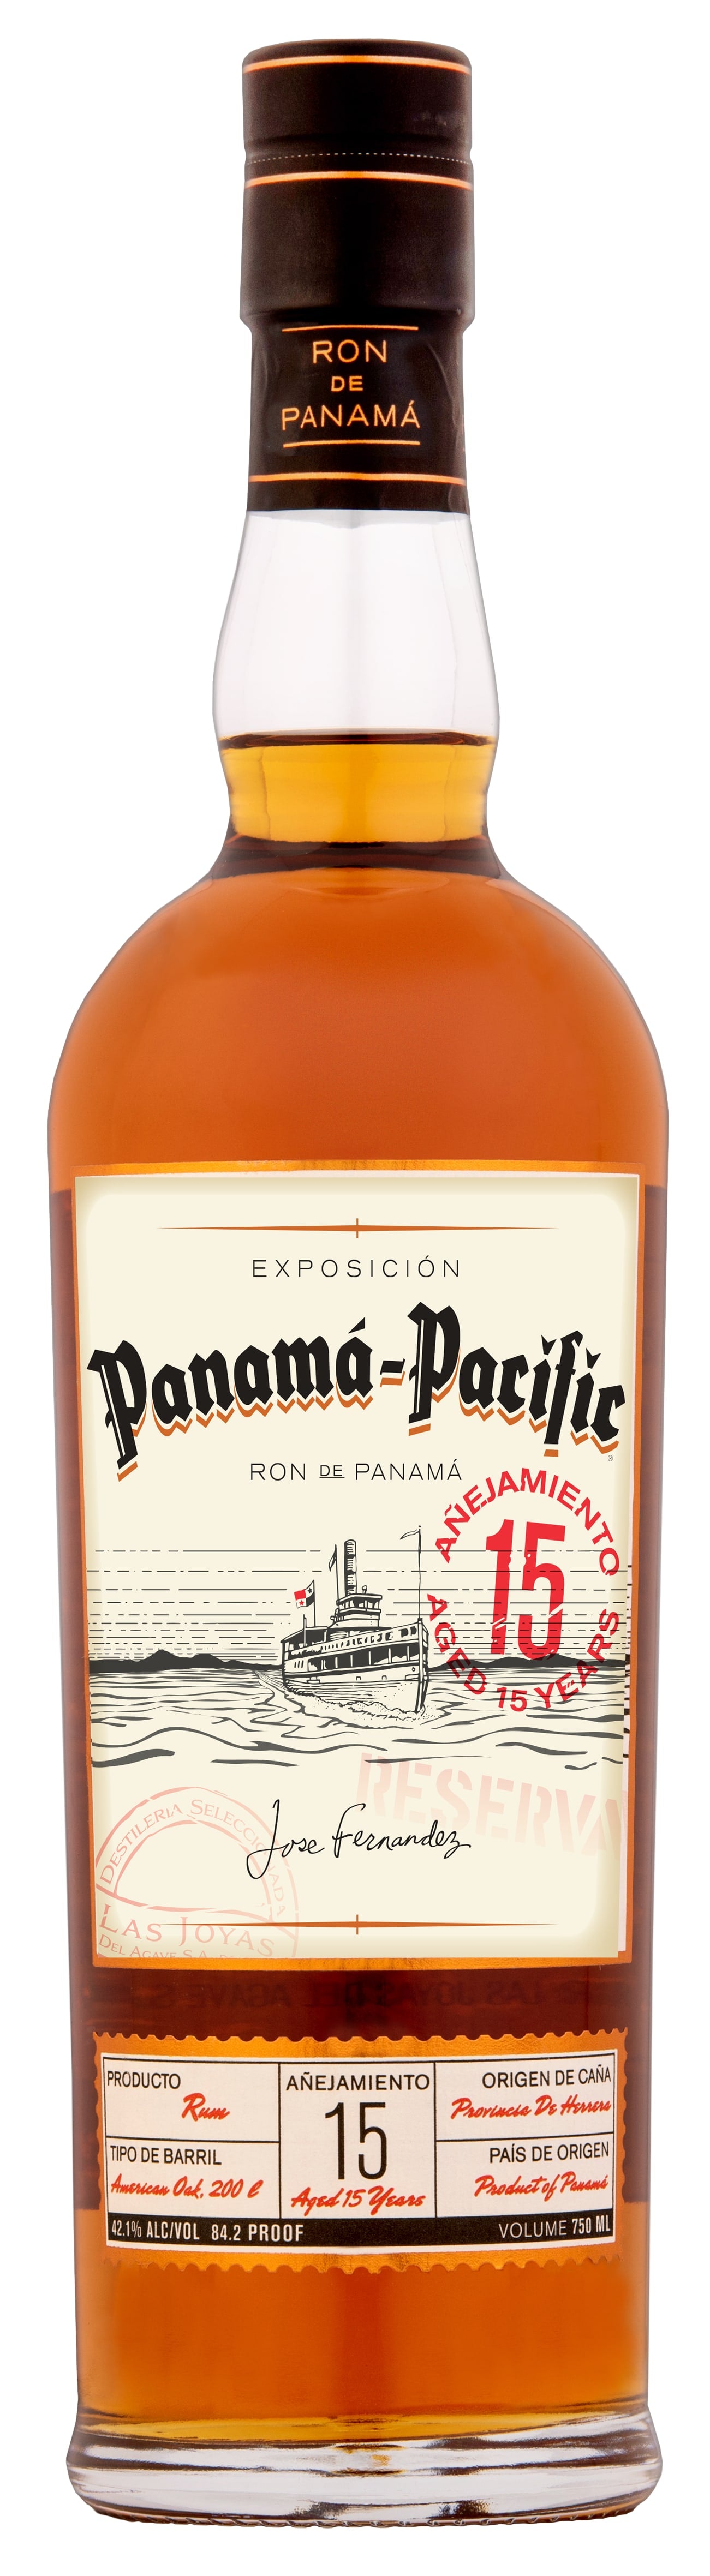 Panama-Pacific, 15 year old, Rum, Reserva